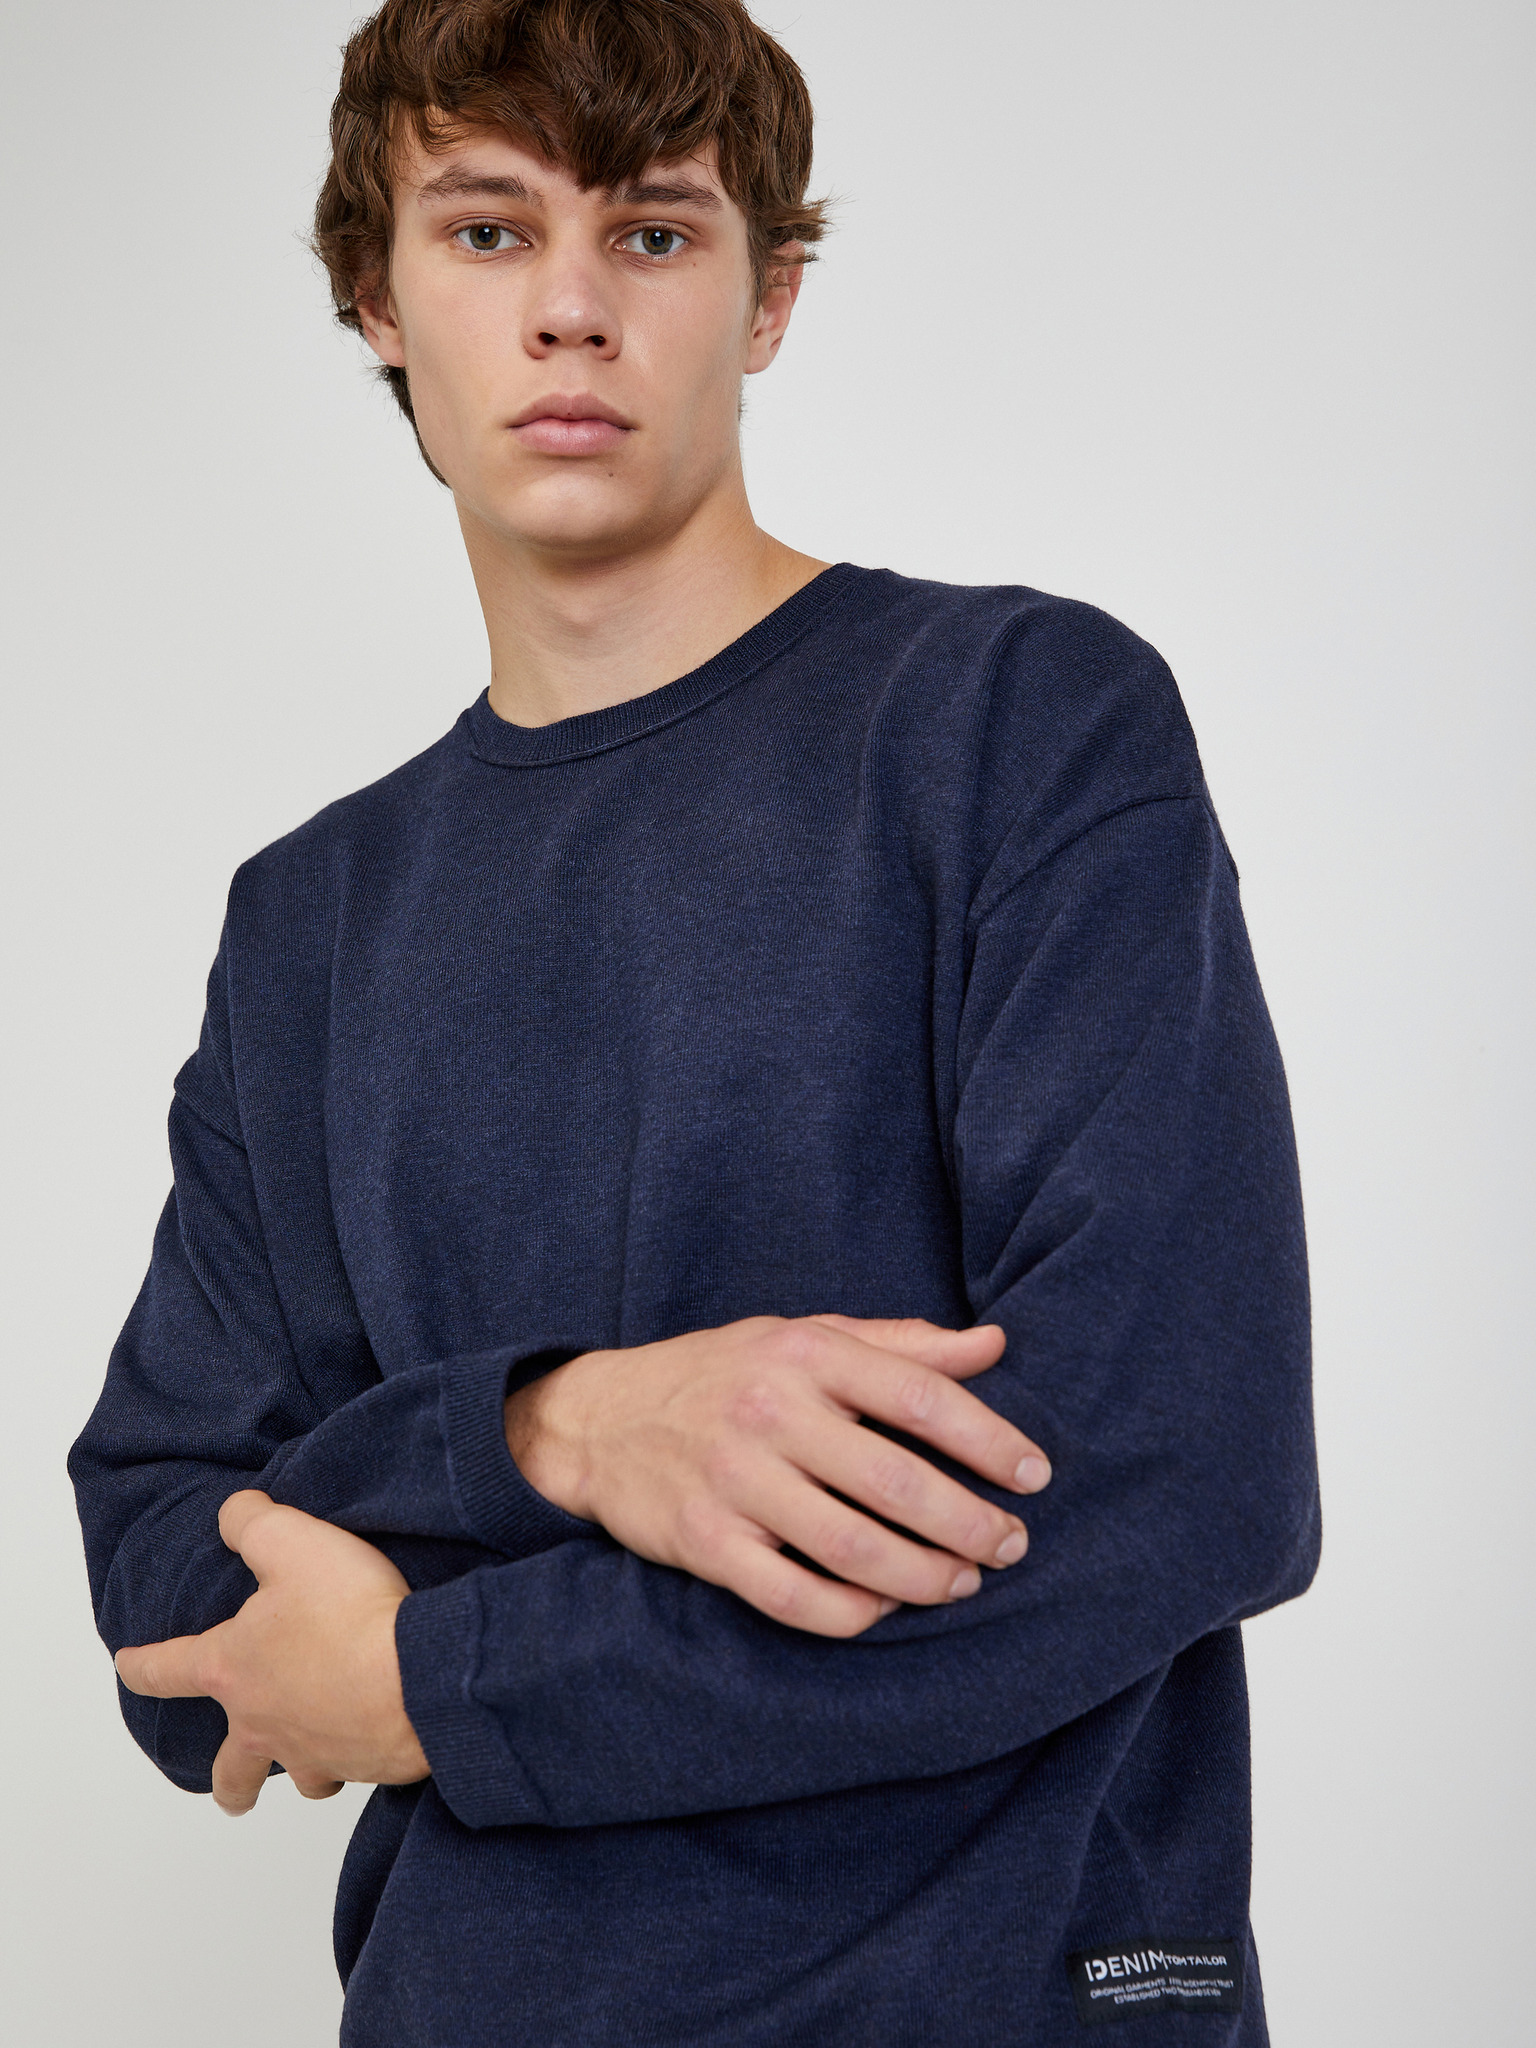 Tailor - Denim Sweater Tom